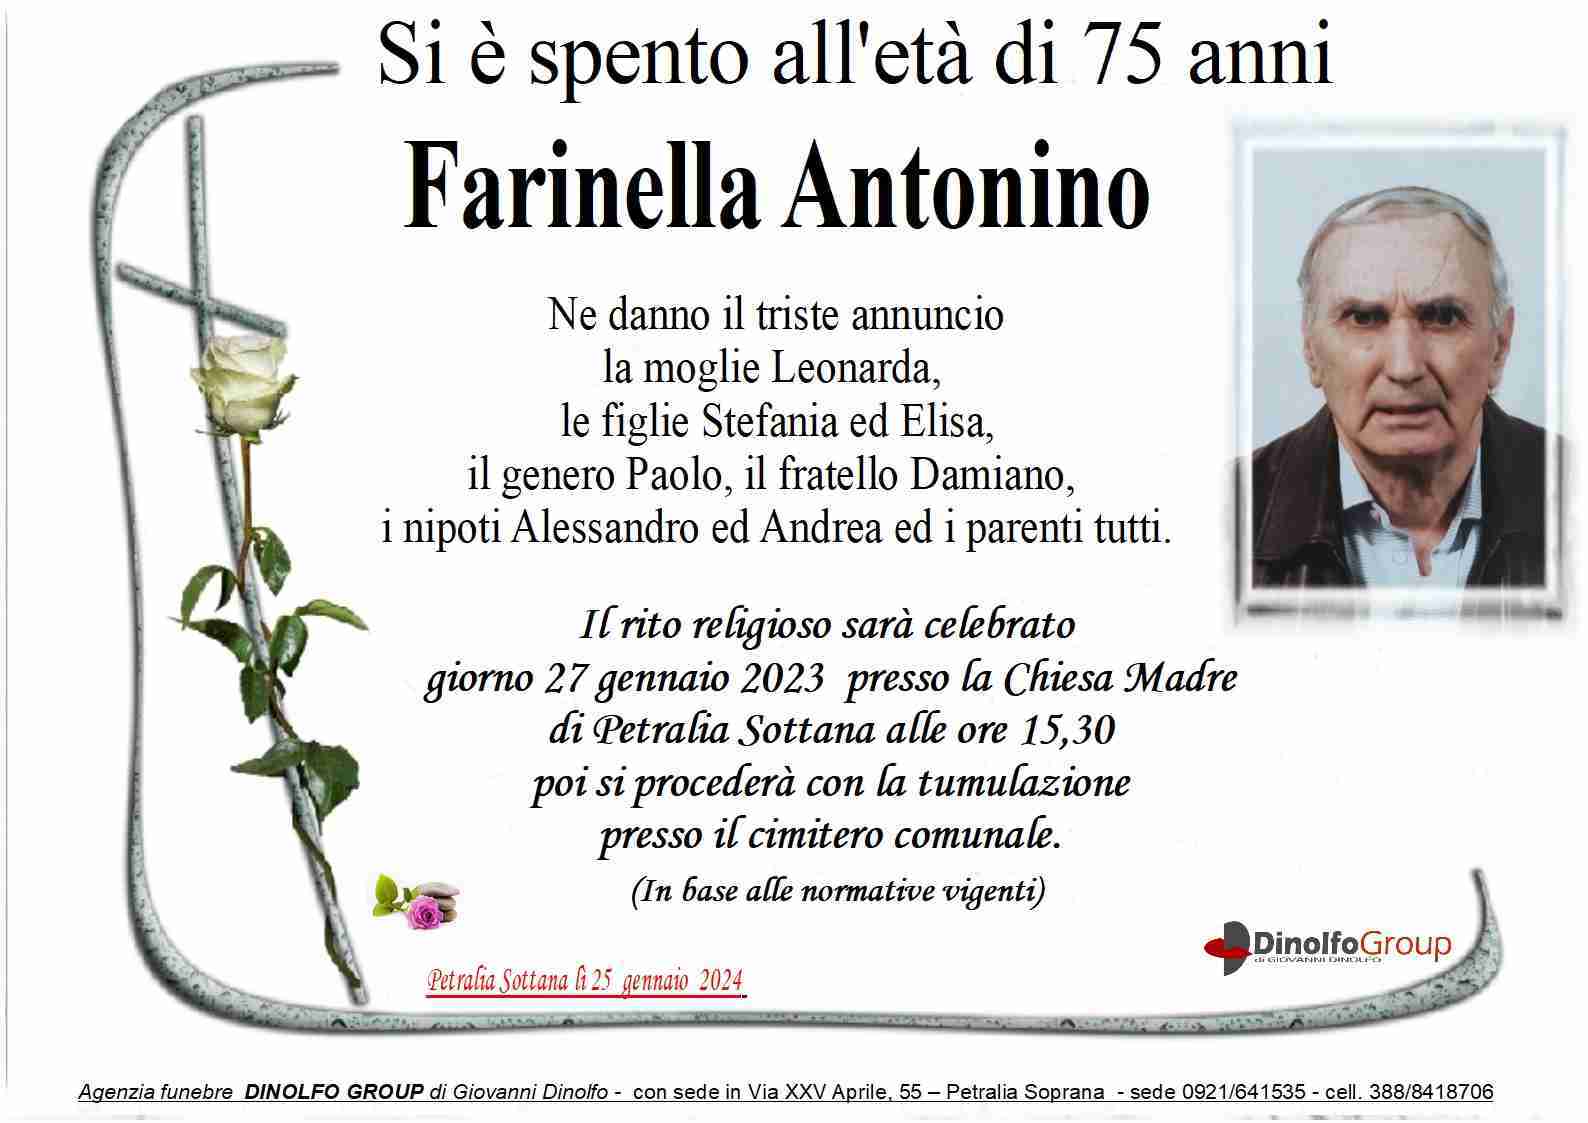 Antonino Farinella